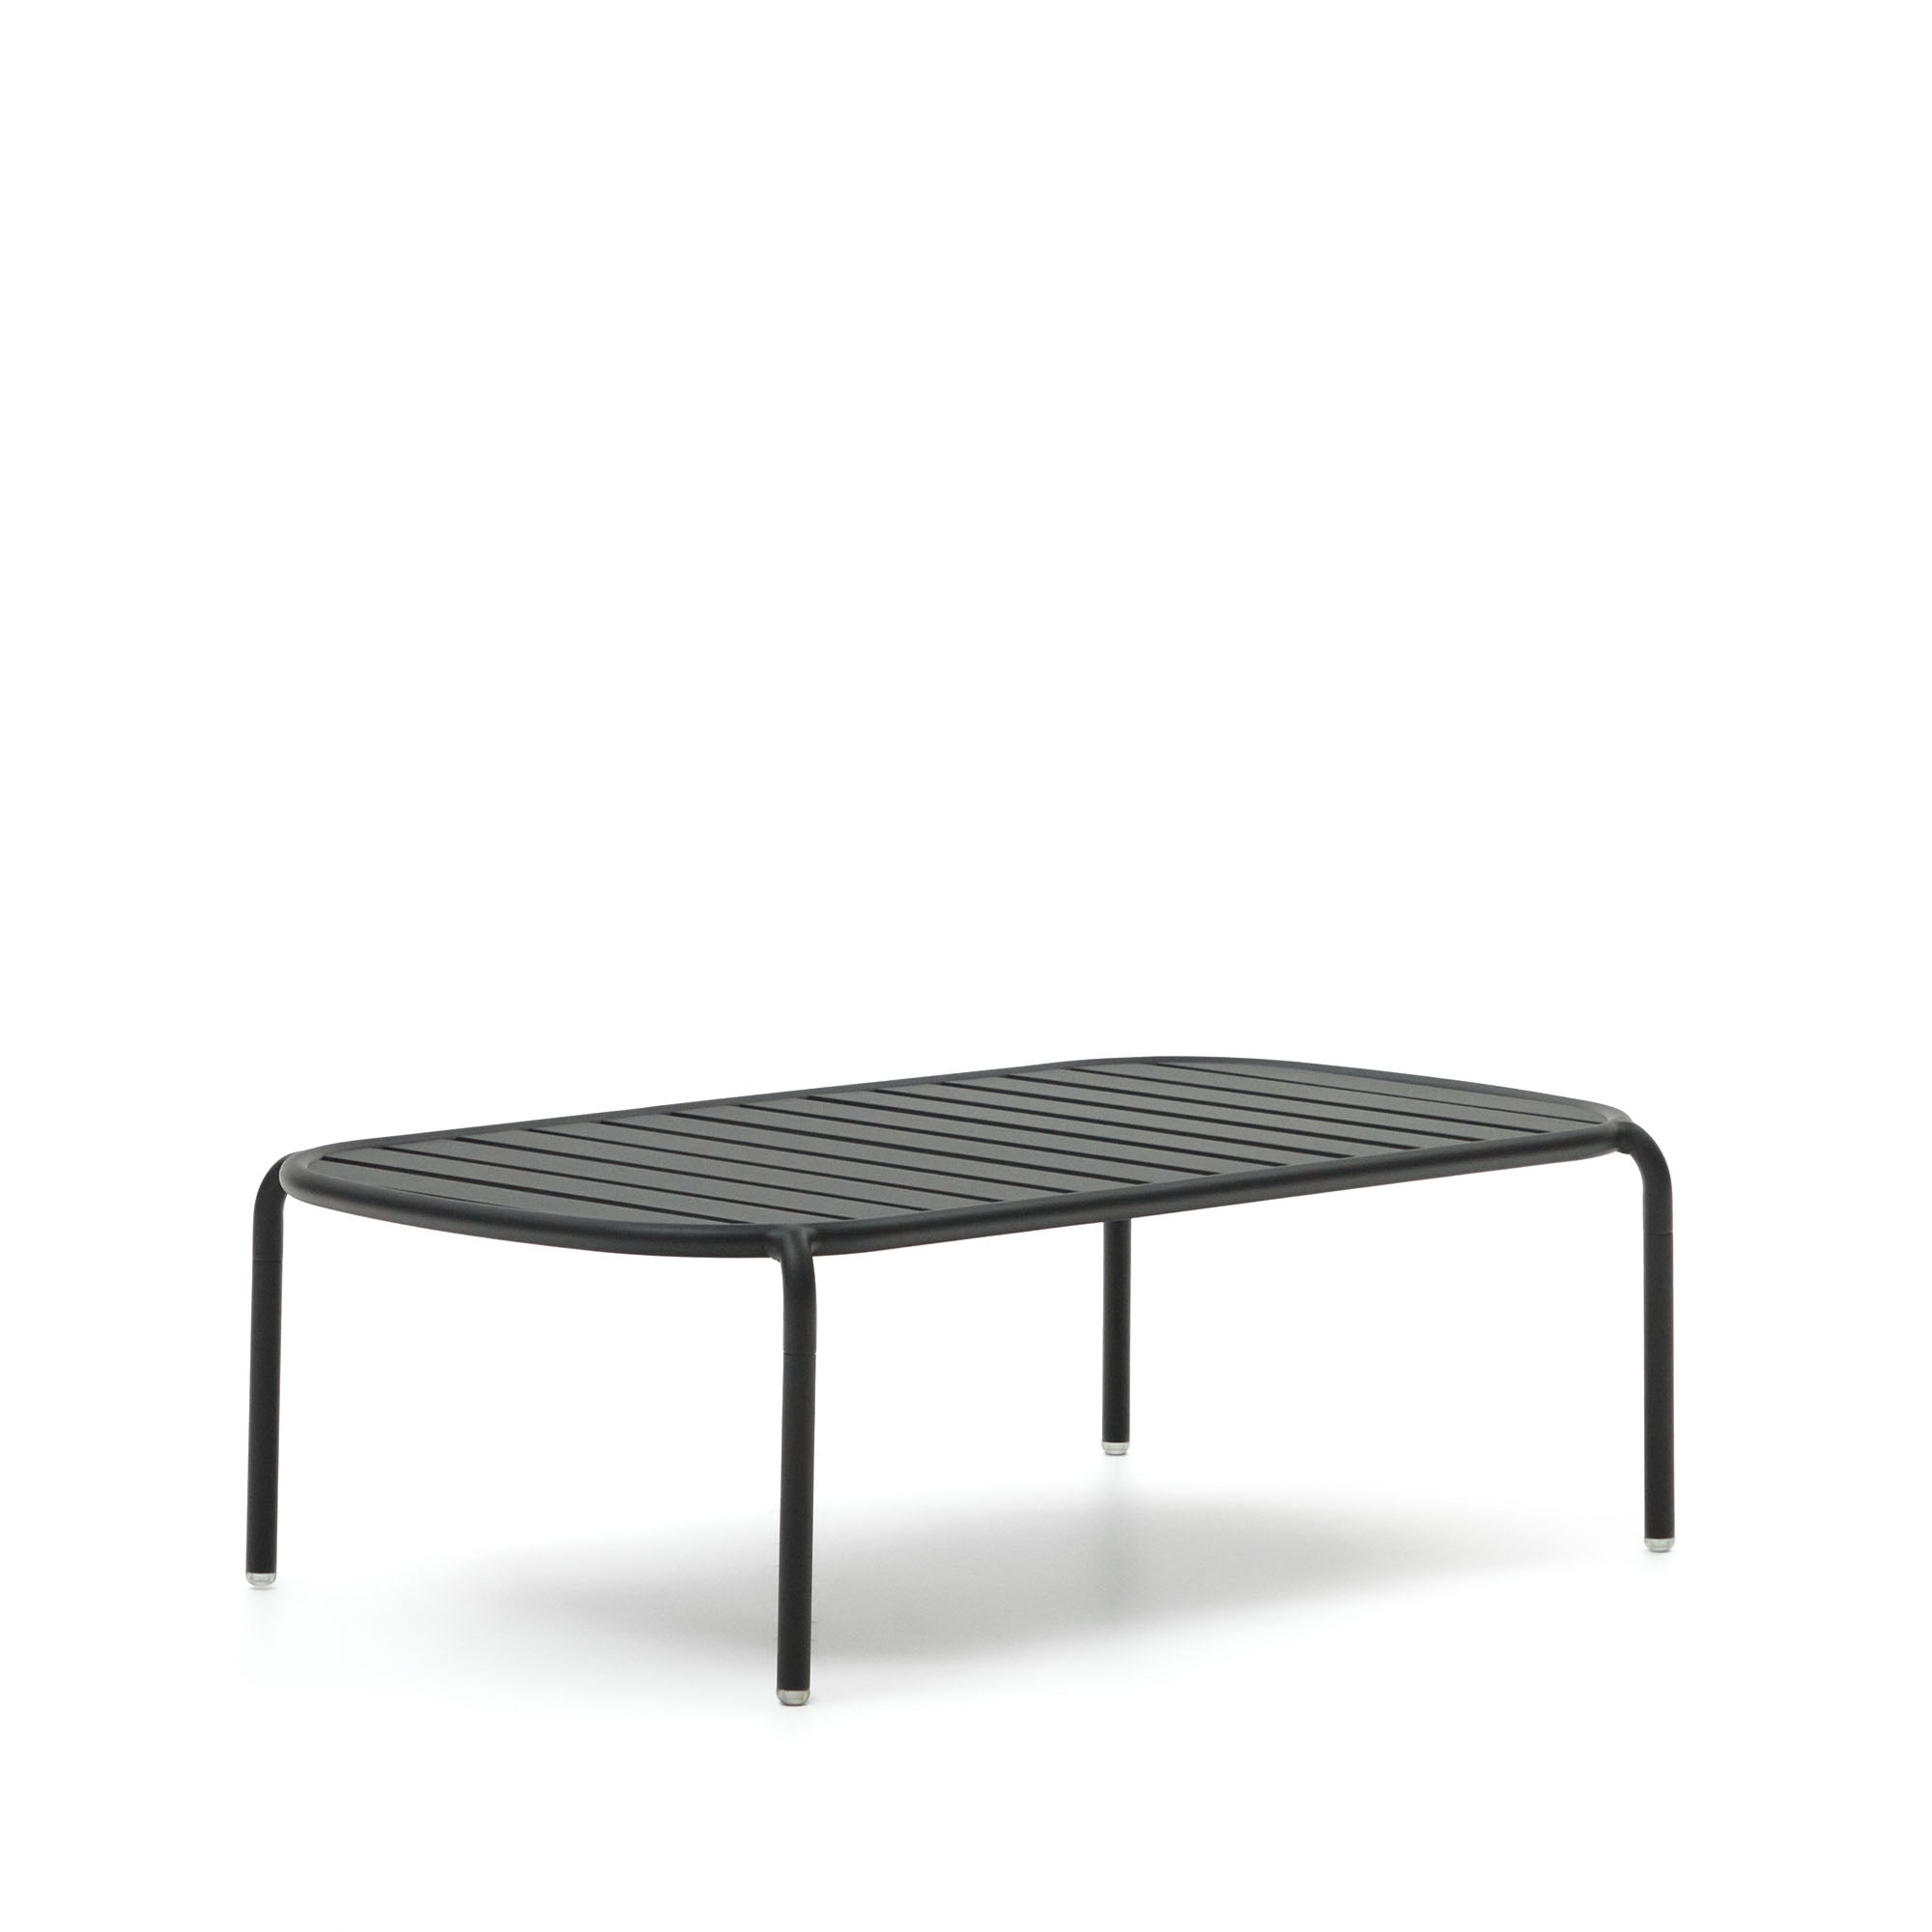 Joncols outdoor aluminium coffee table with powder coated grey finish, Ø 110 x 62 cm